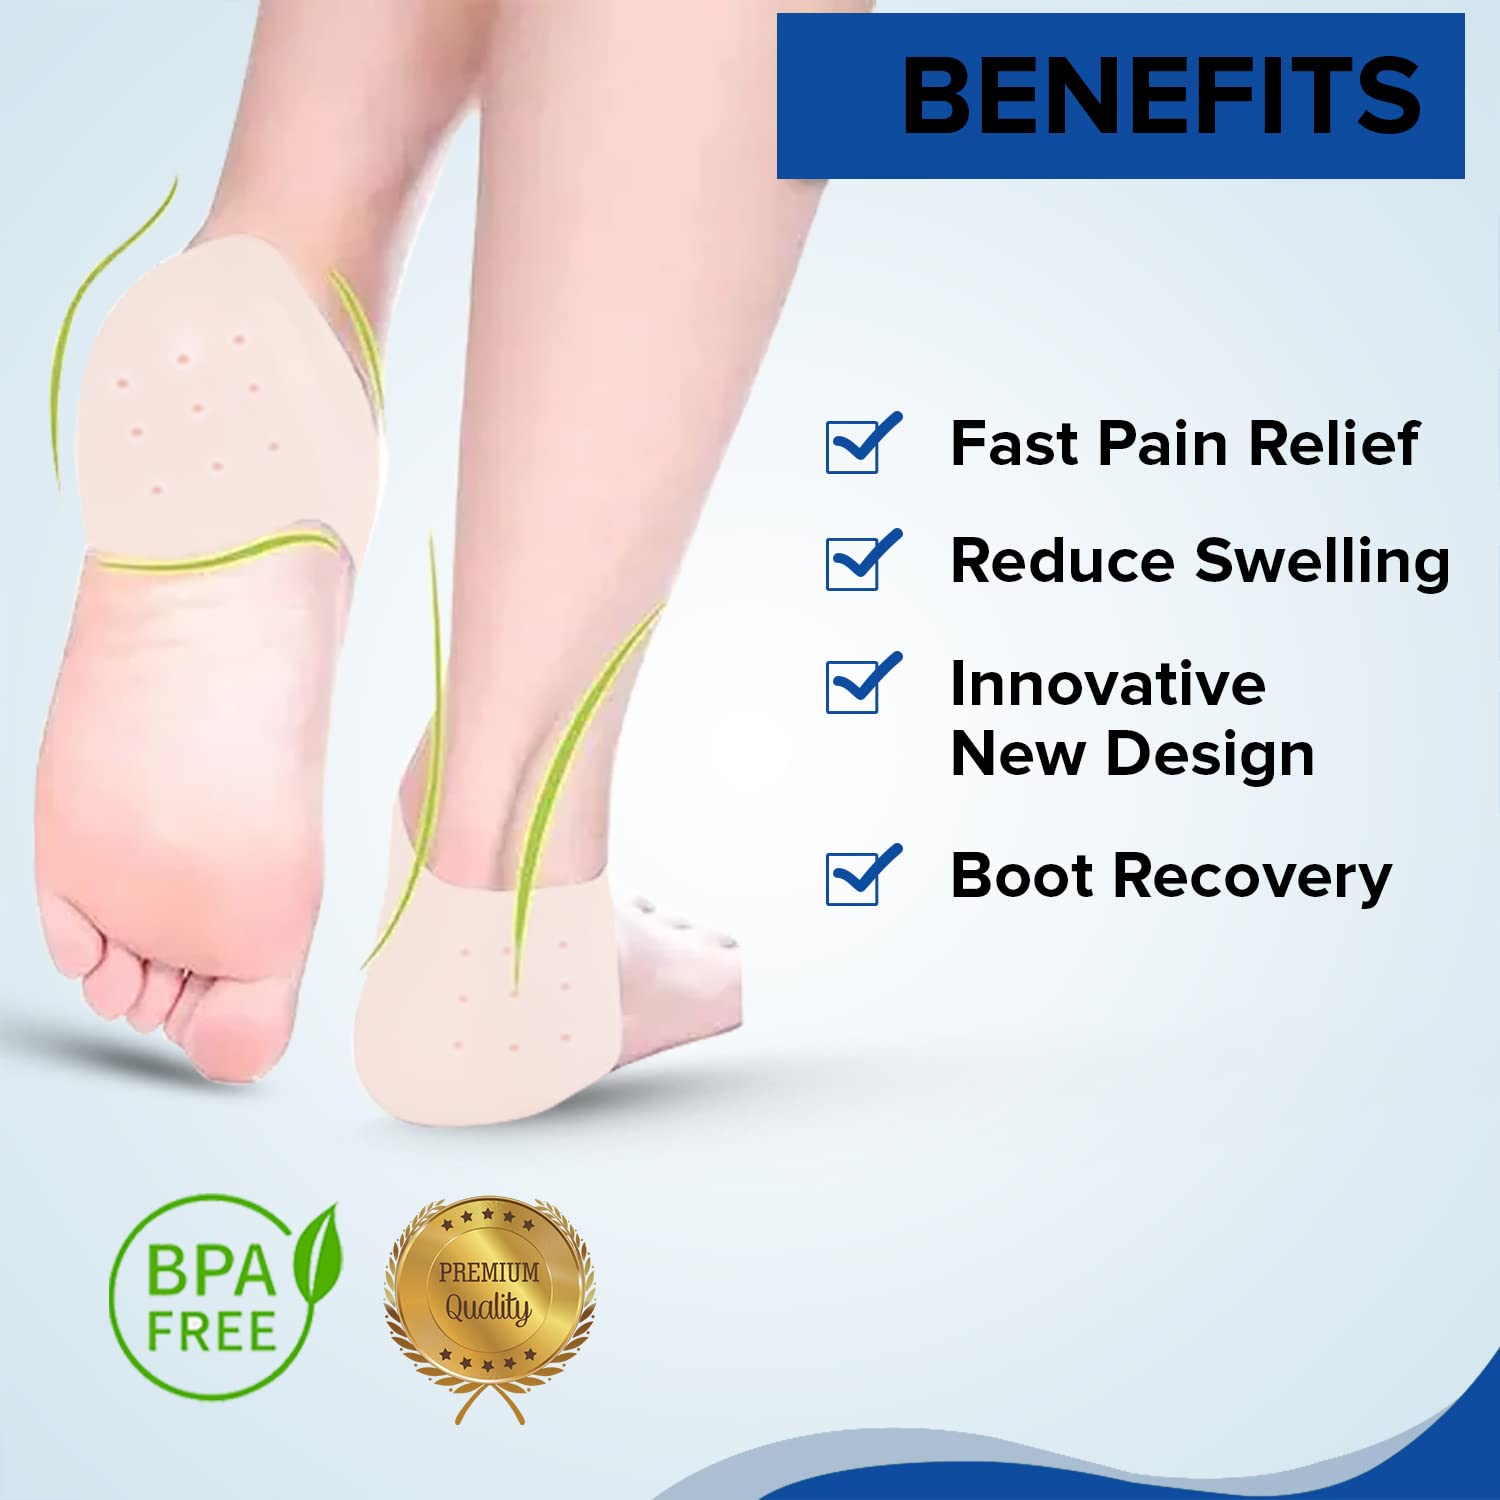 Dr Foot Anti Crack Silicone Gel Heel Pad Socks | For Heel Swelling Pain Relief, Dry Hard, Cracked Heels Repair Cream Foot Care | For Both Men & Women | Half-length - 1 Pair (Free Size) (Pack of 10)